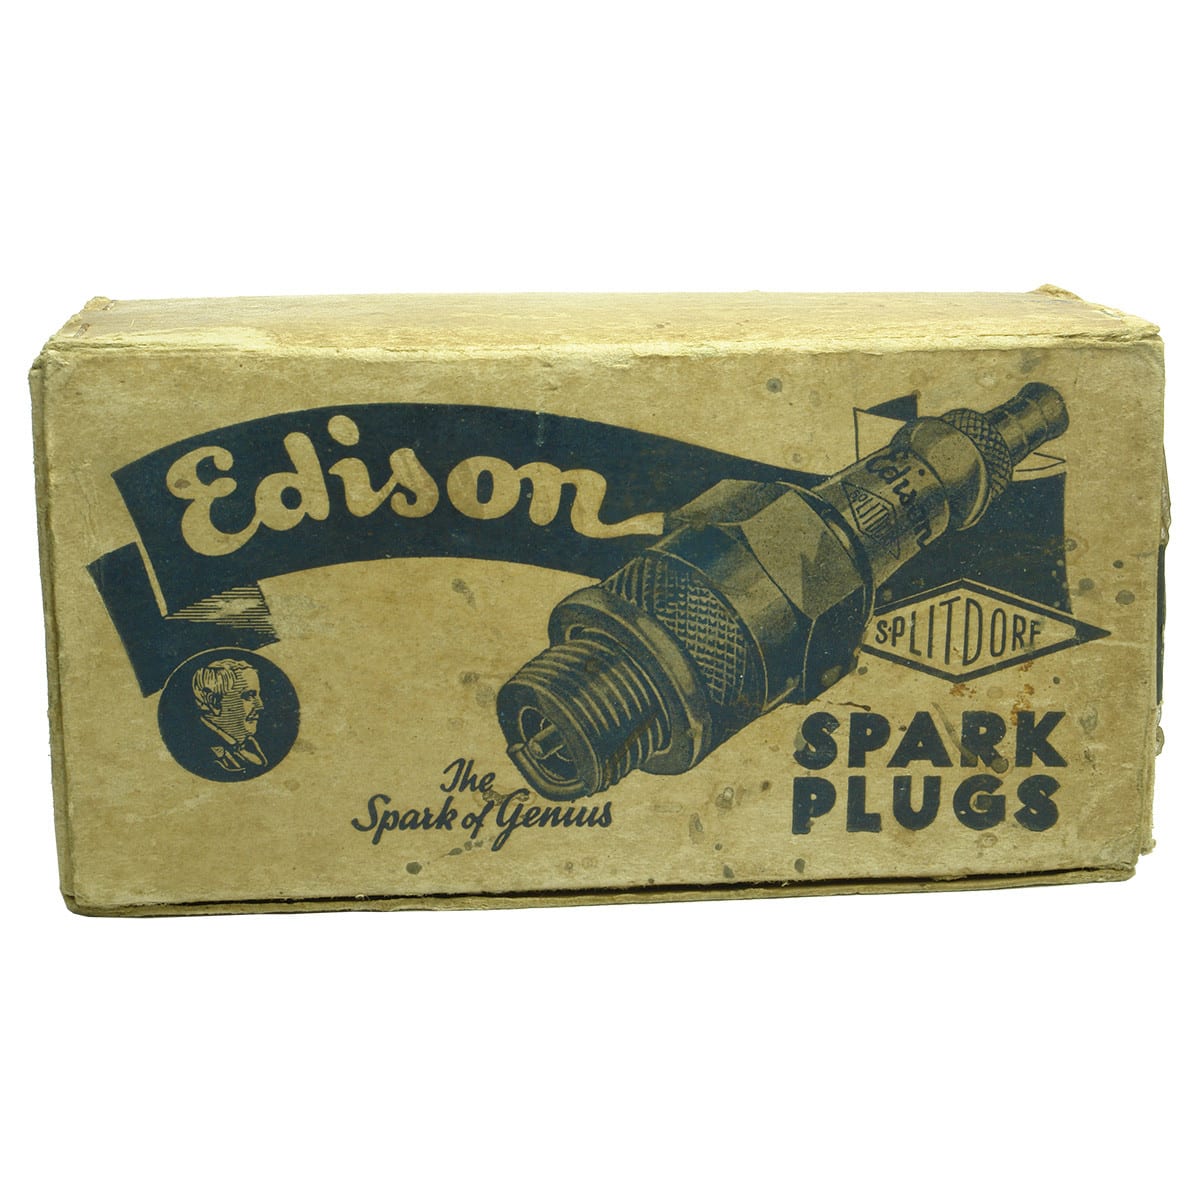 Garagenalia. Box of Edison Splitdorf Spark Plugs, Sydney, Australia under arrangement with corporation in West Orange, N. J., U. S. A. (United States)